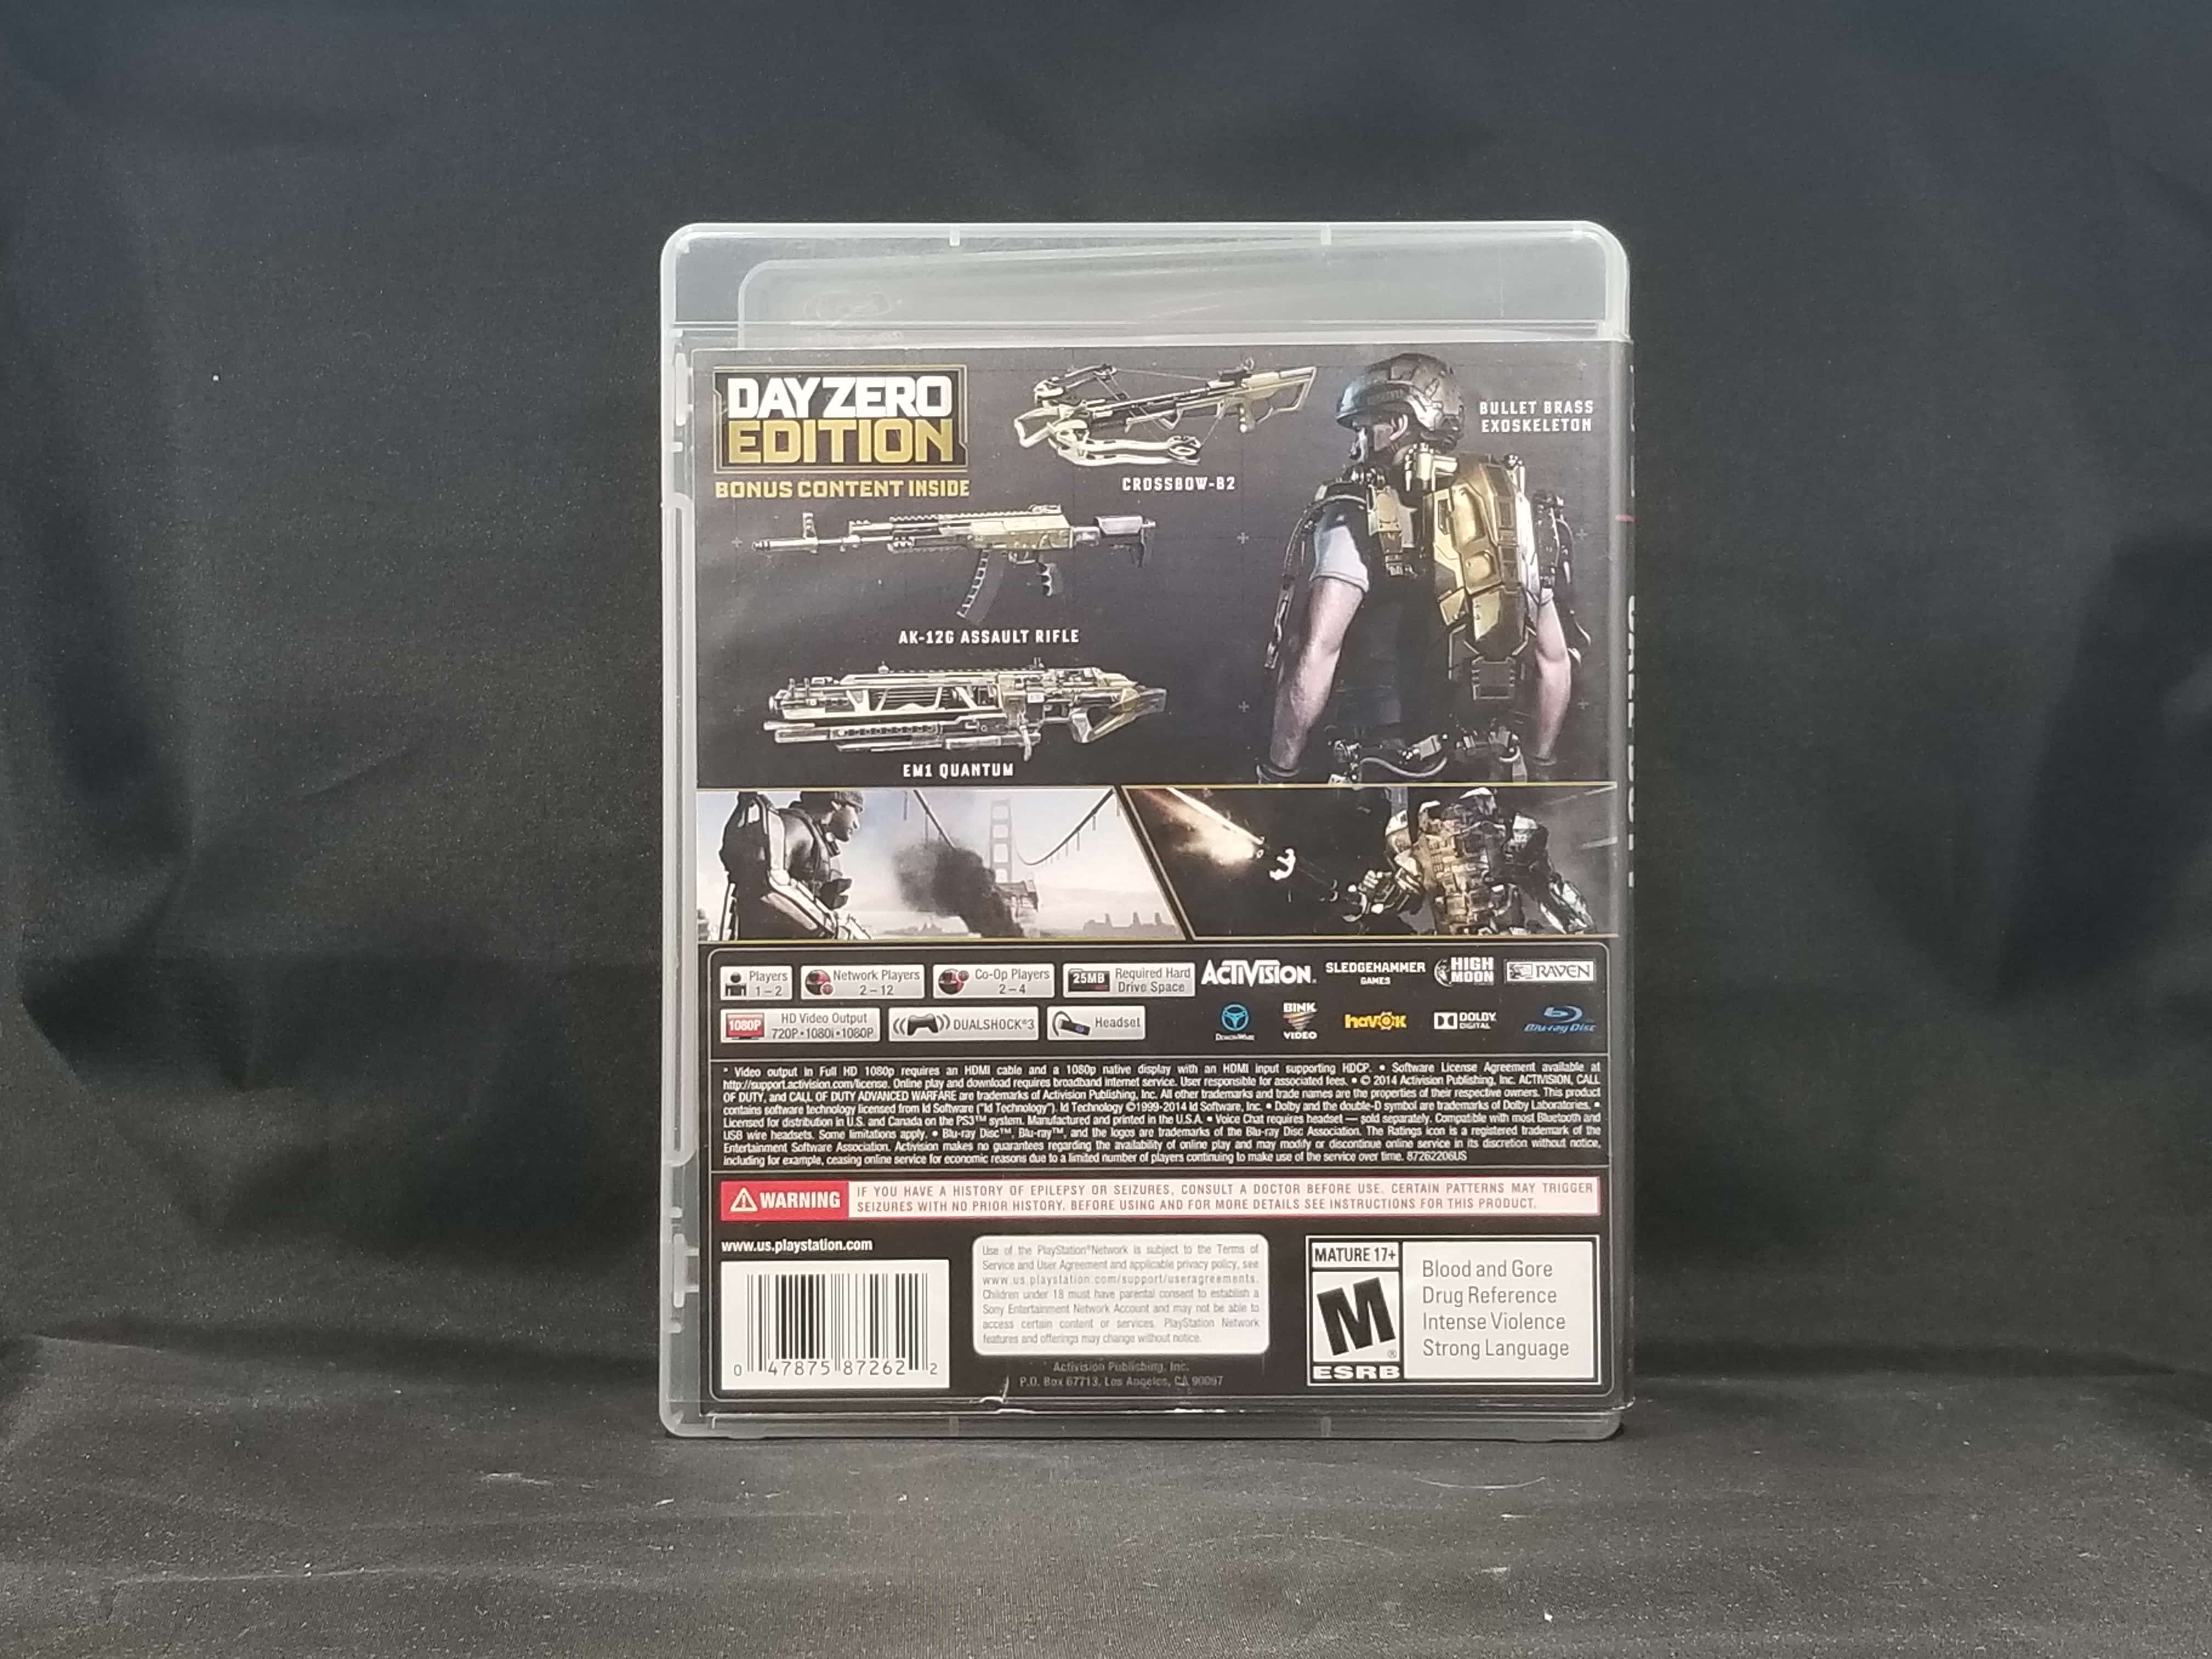 Call of Duty Advanced Warfare Day Zero Edition Playstation 3 Game